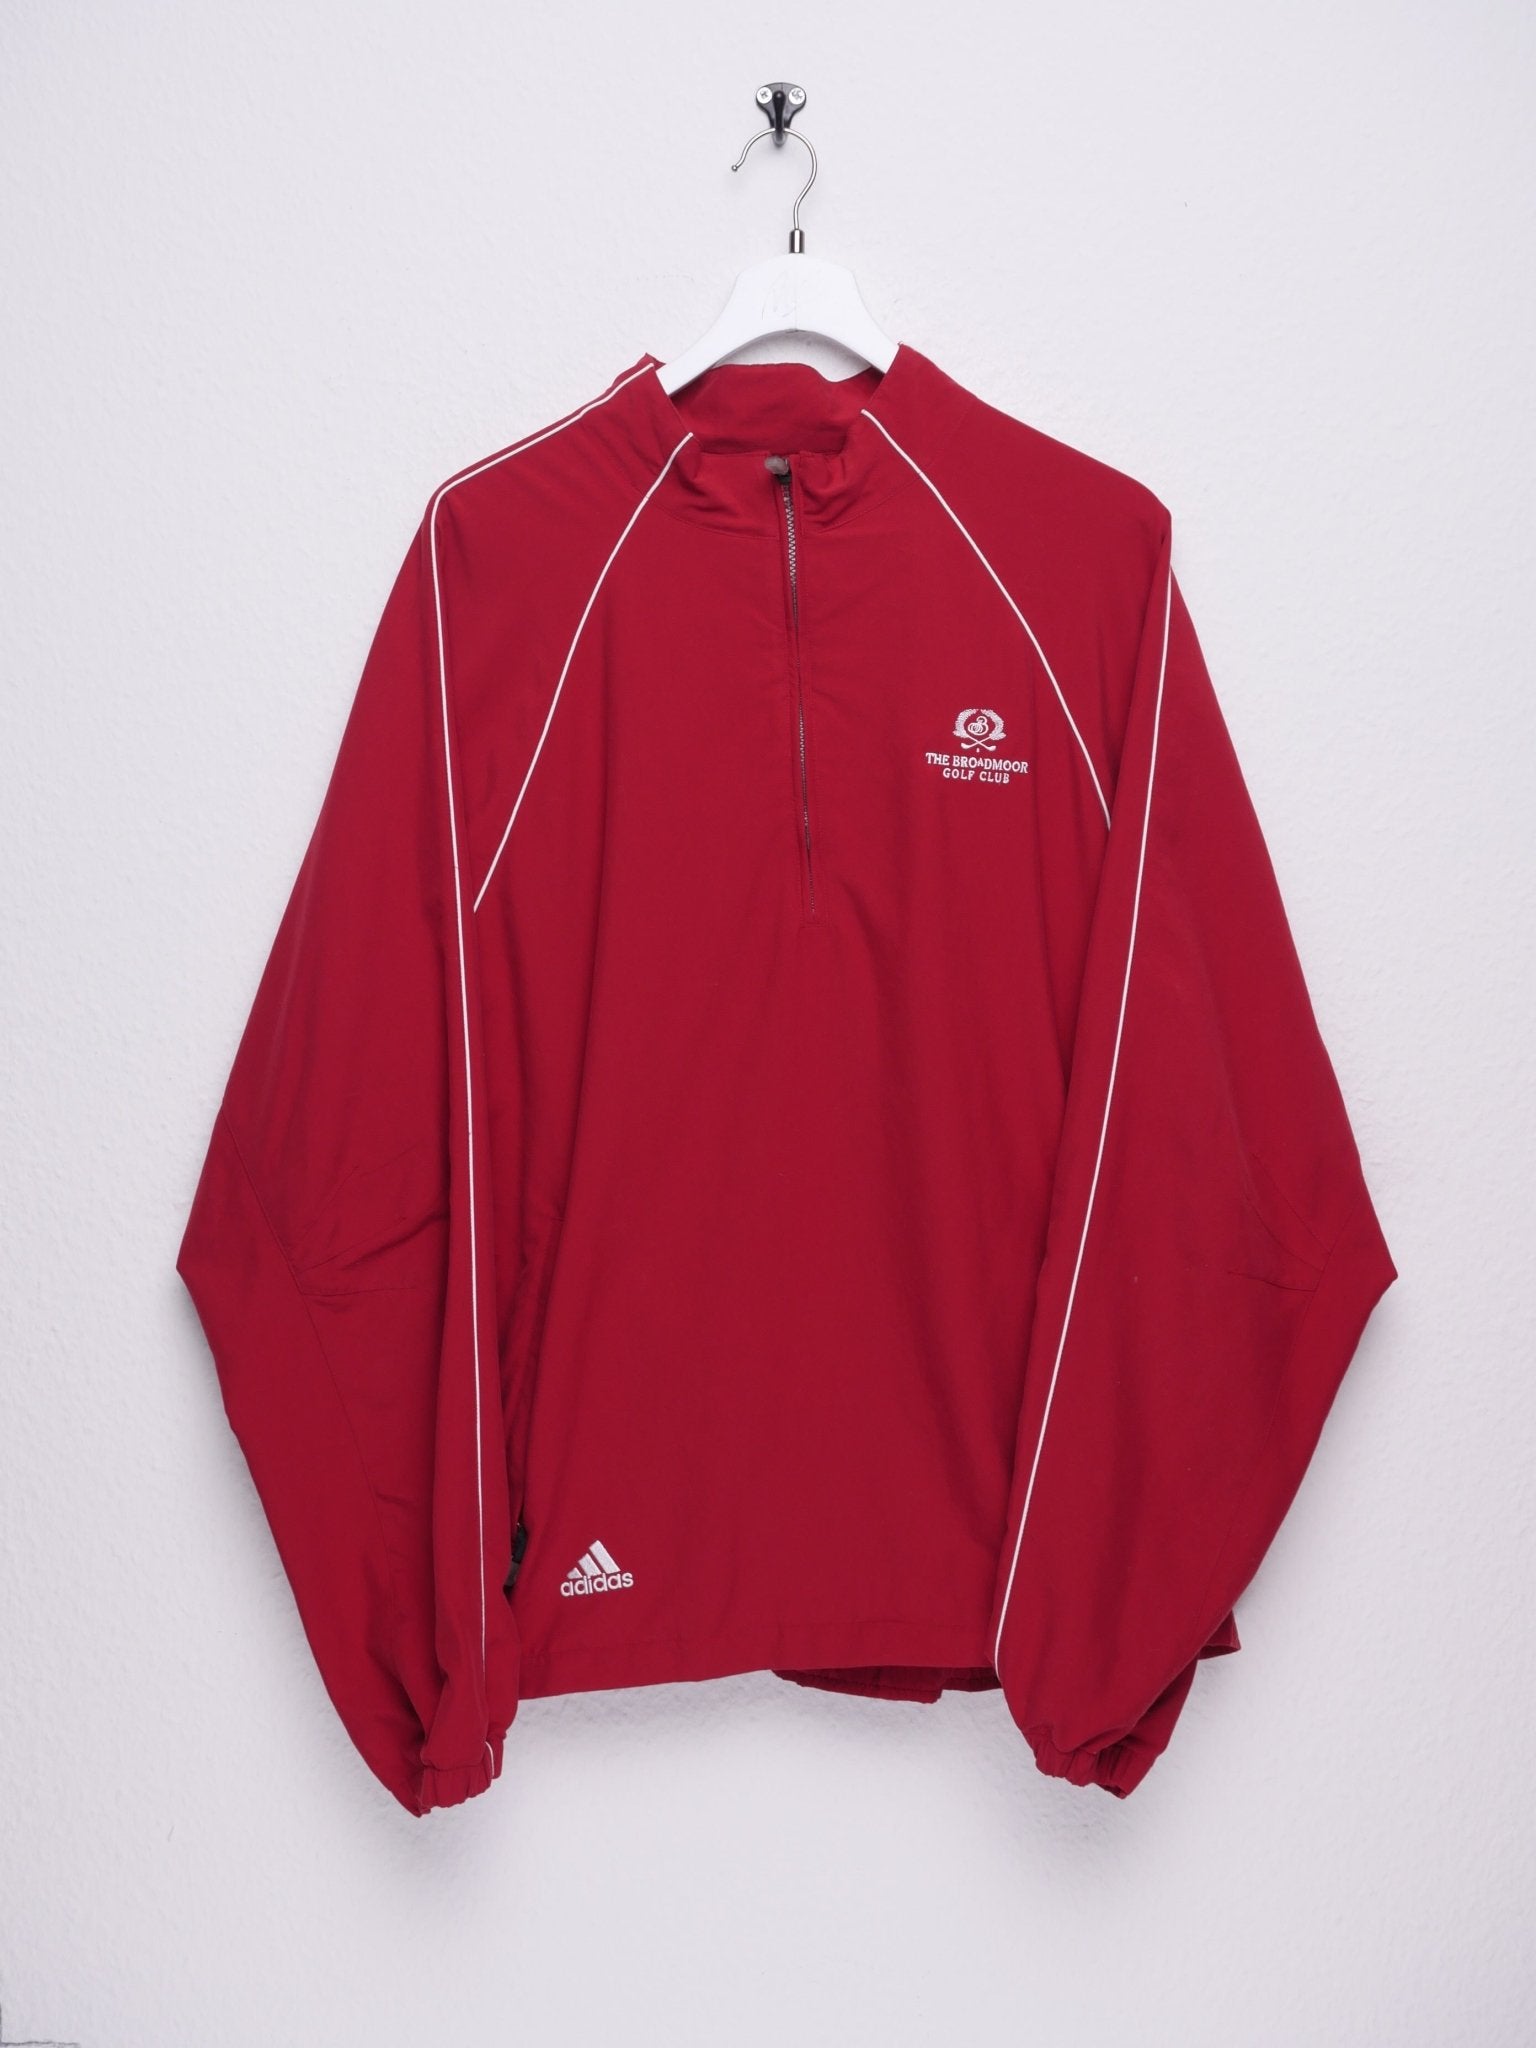 Adidas embroidered Logo 'The Broadmoor Golf Club' red Half Zip Track Jacket - Peeces